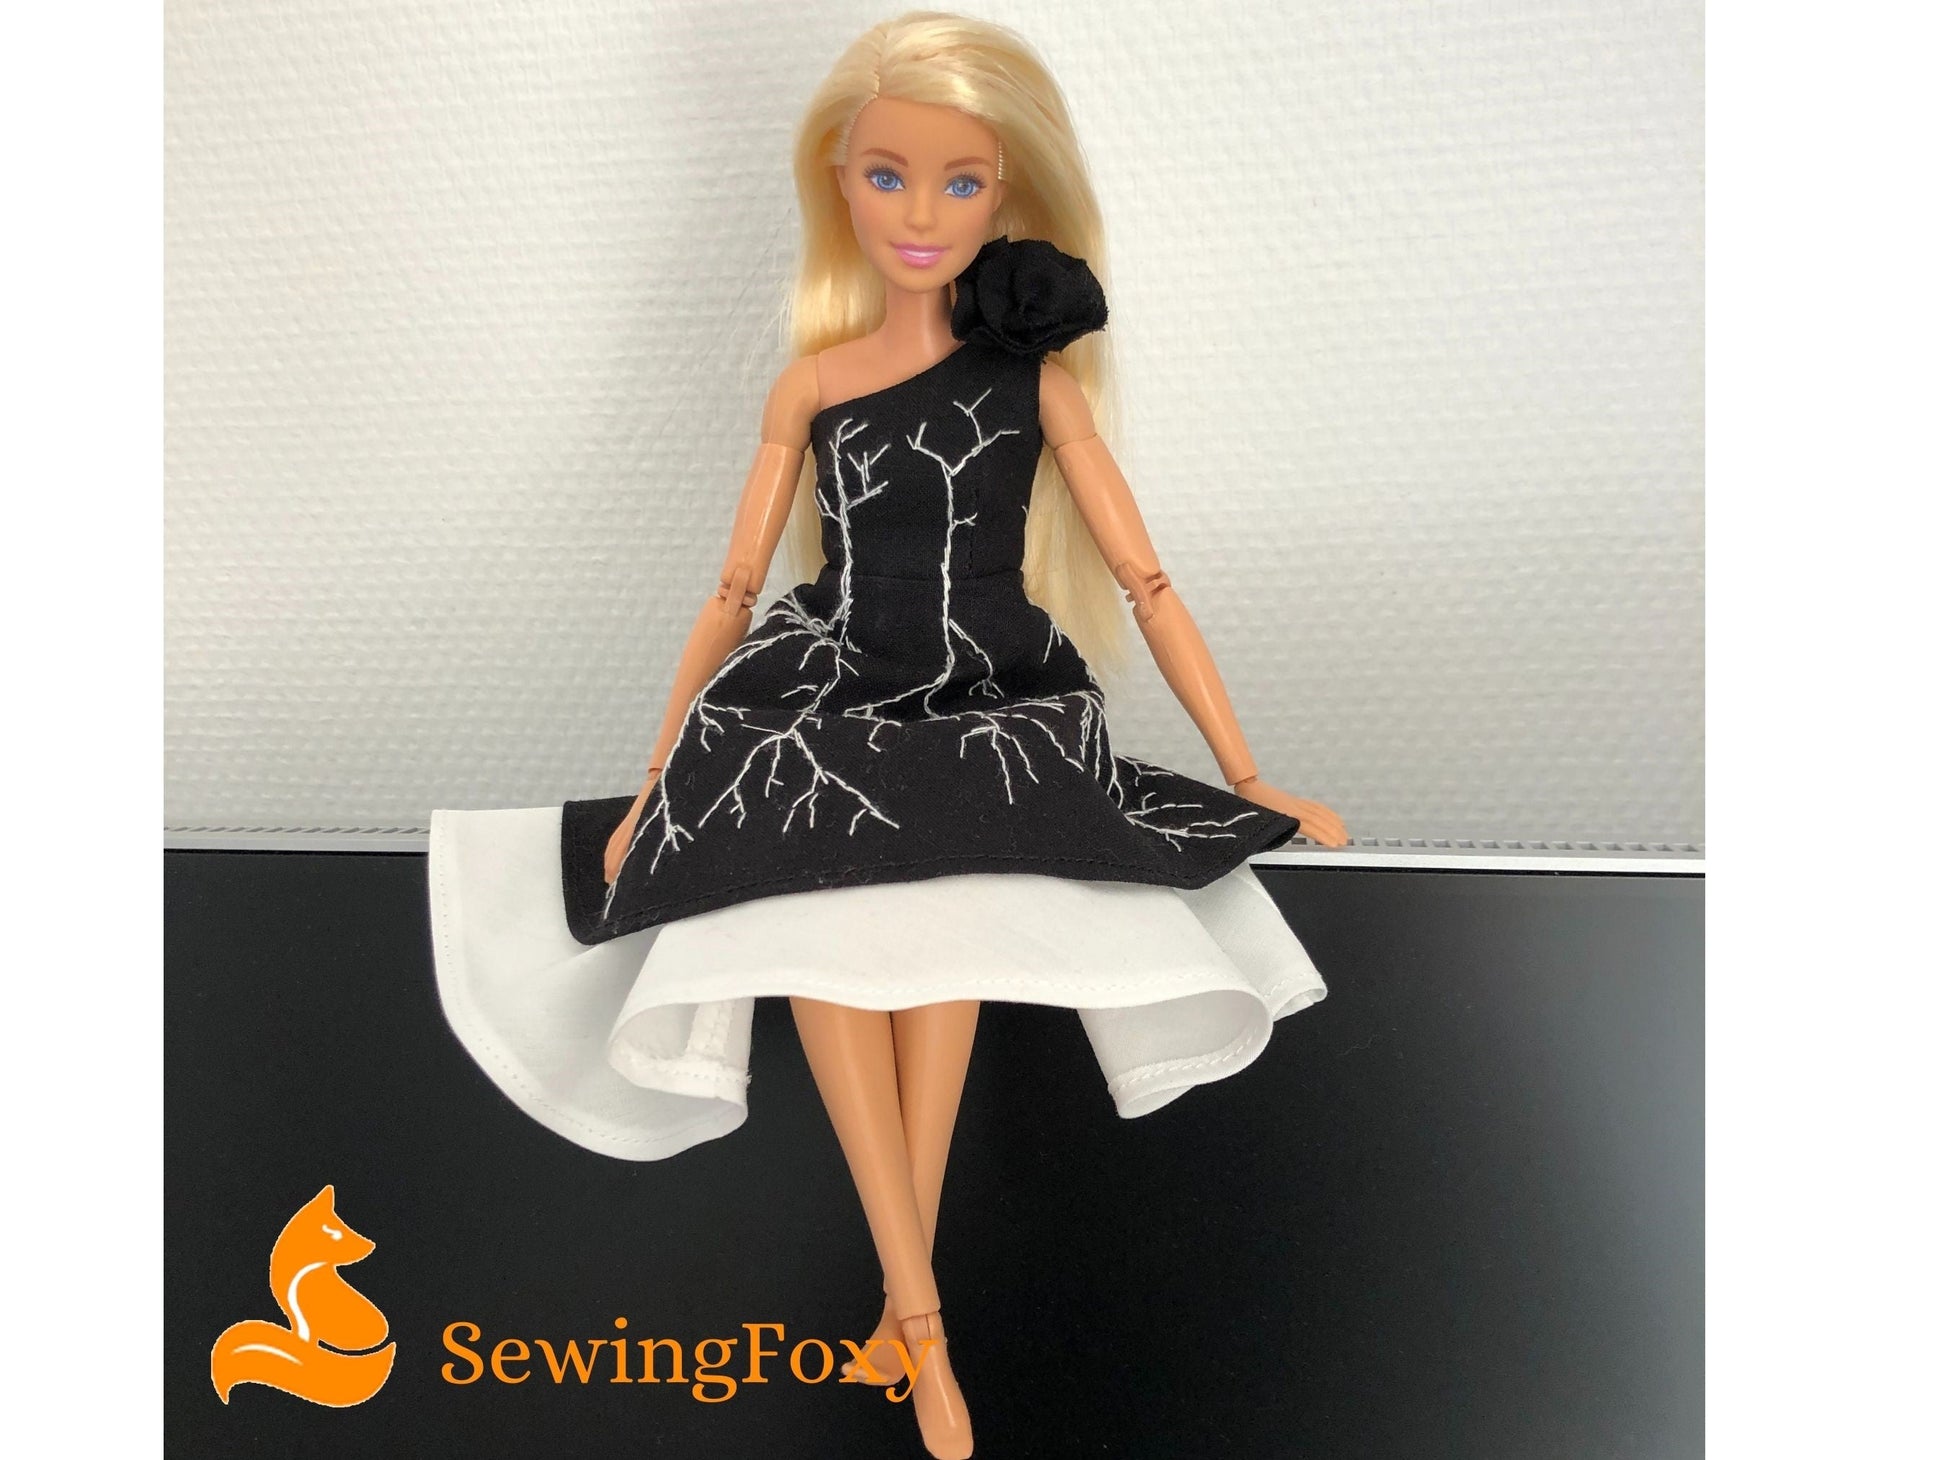 Barbie Doll Black White Dress Sewing Pattern